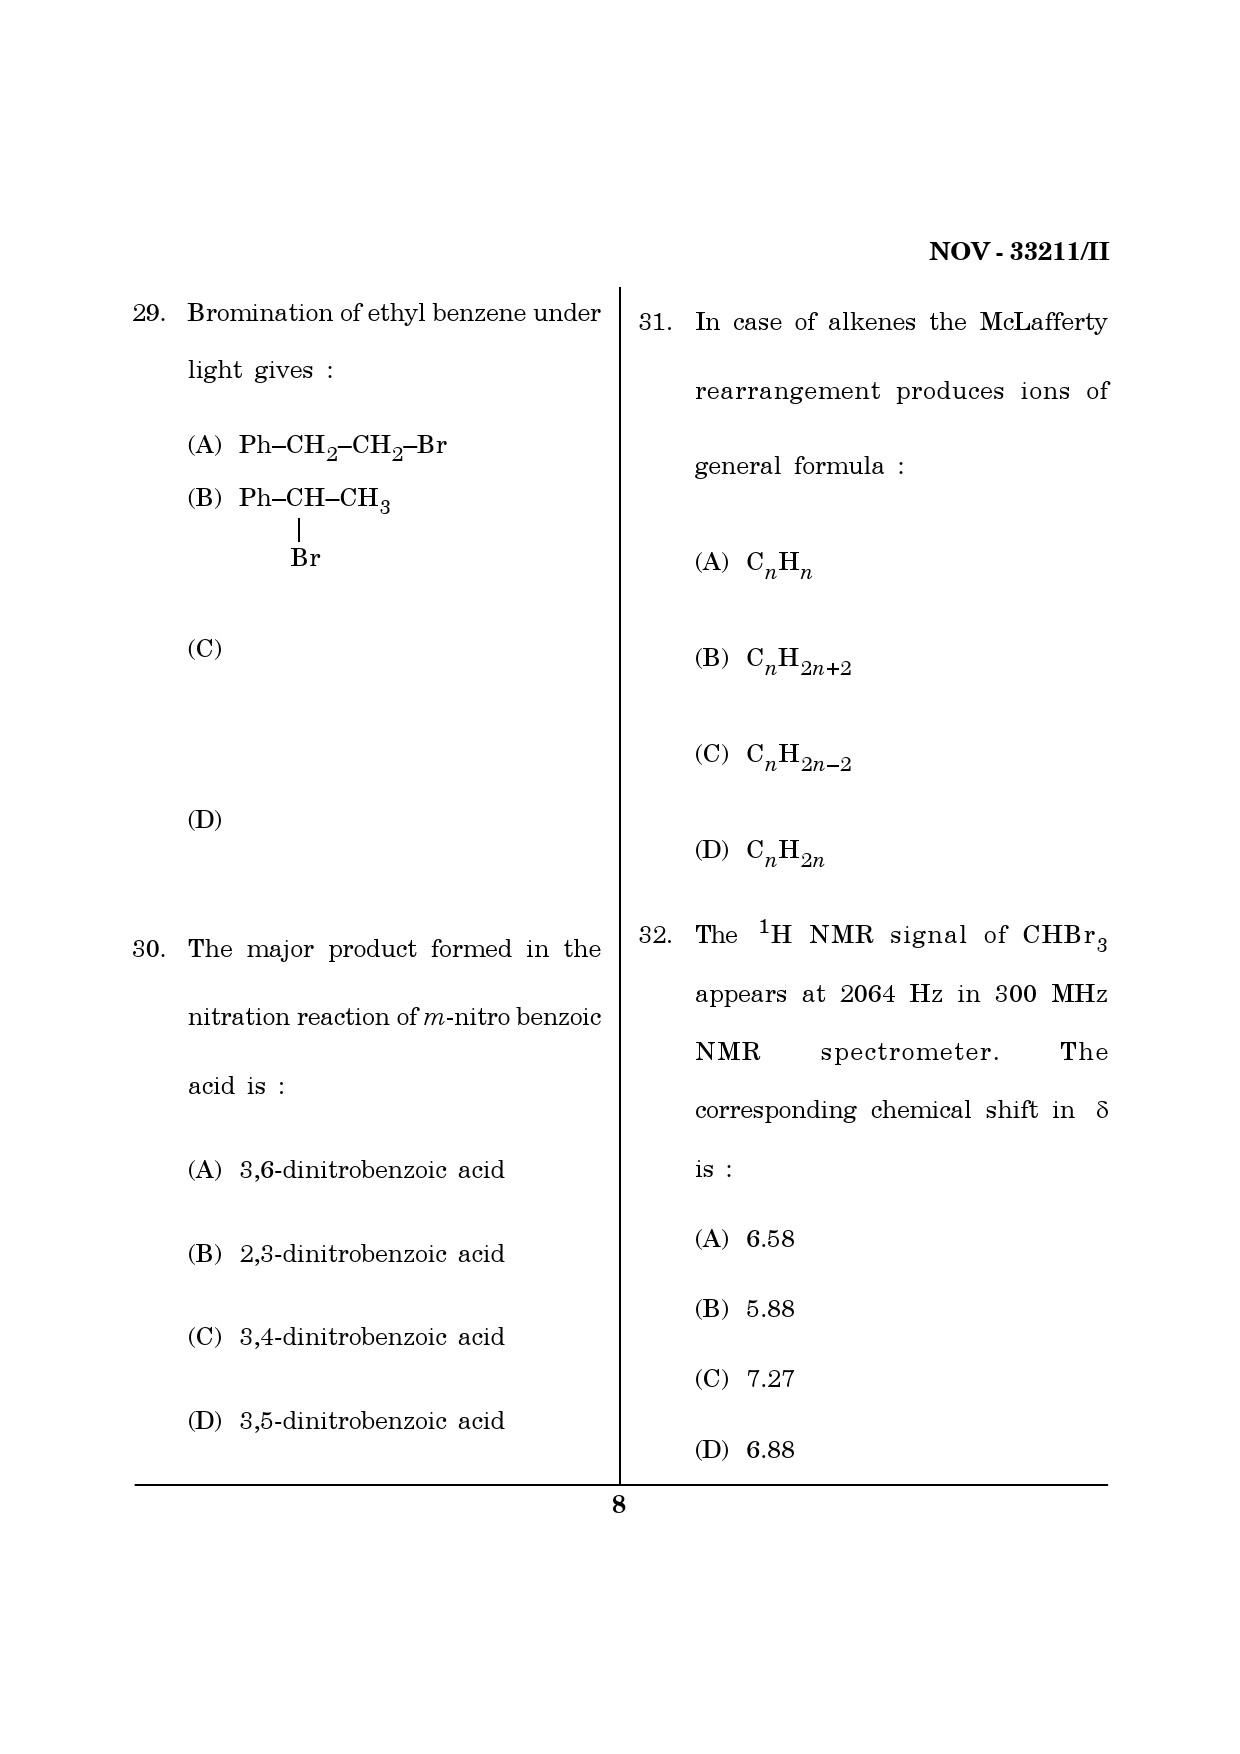 Maharashtra SET Chemical Sciences Question Paper II November 2011 8